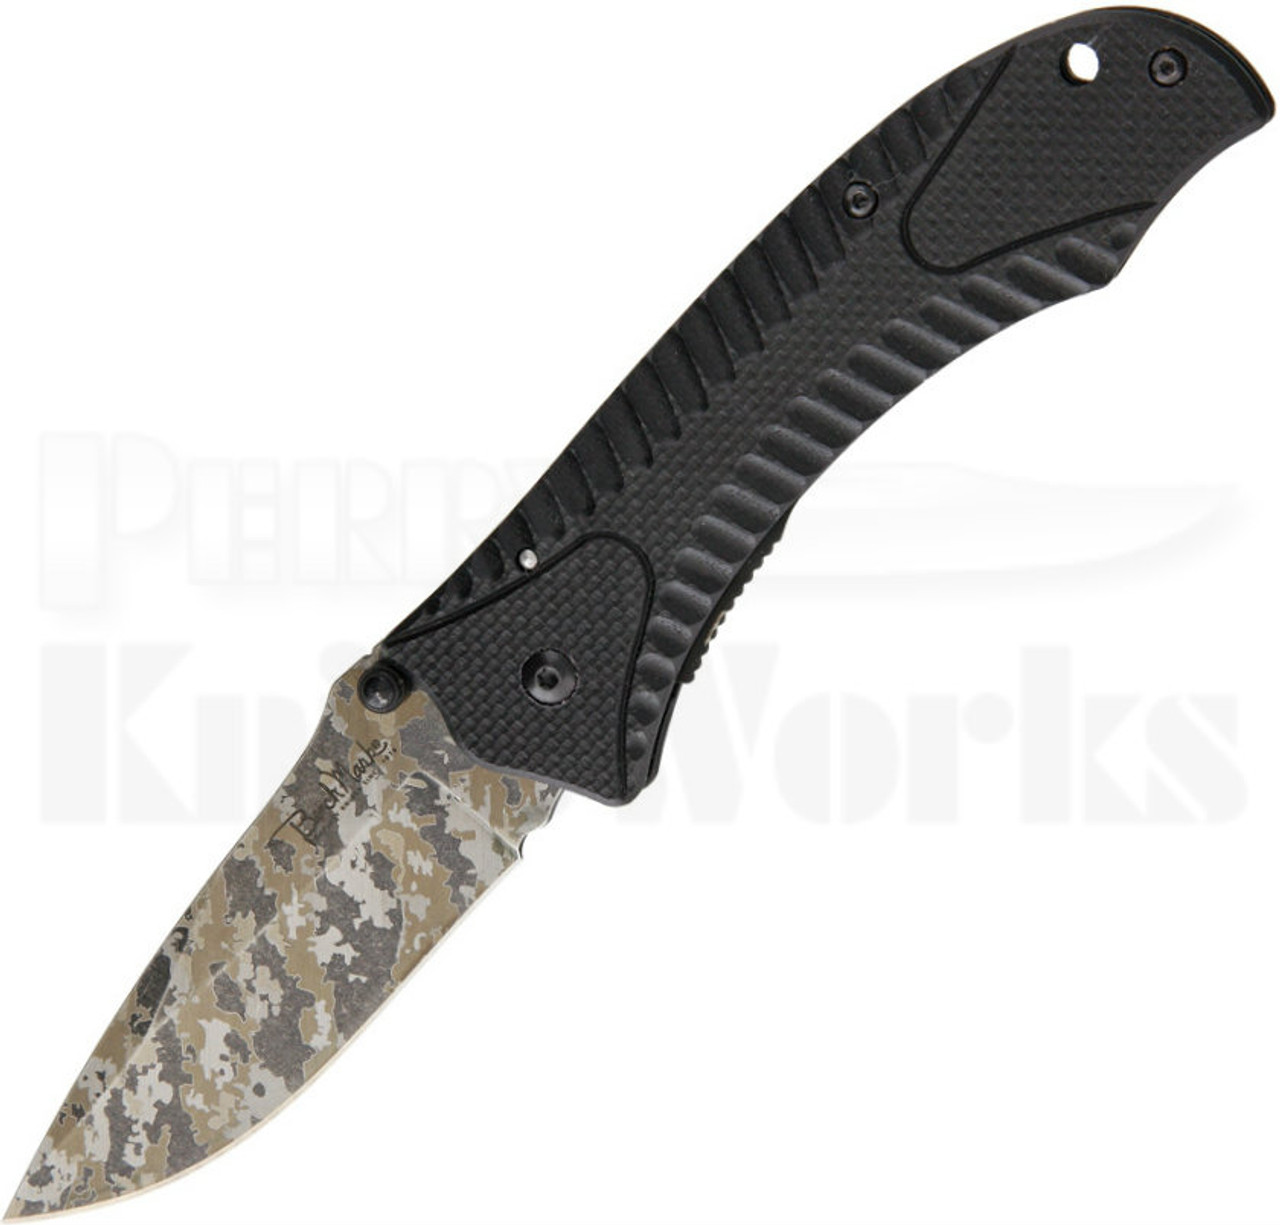 Benchmark Black G10 Assisted Linerlock Knife